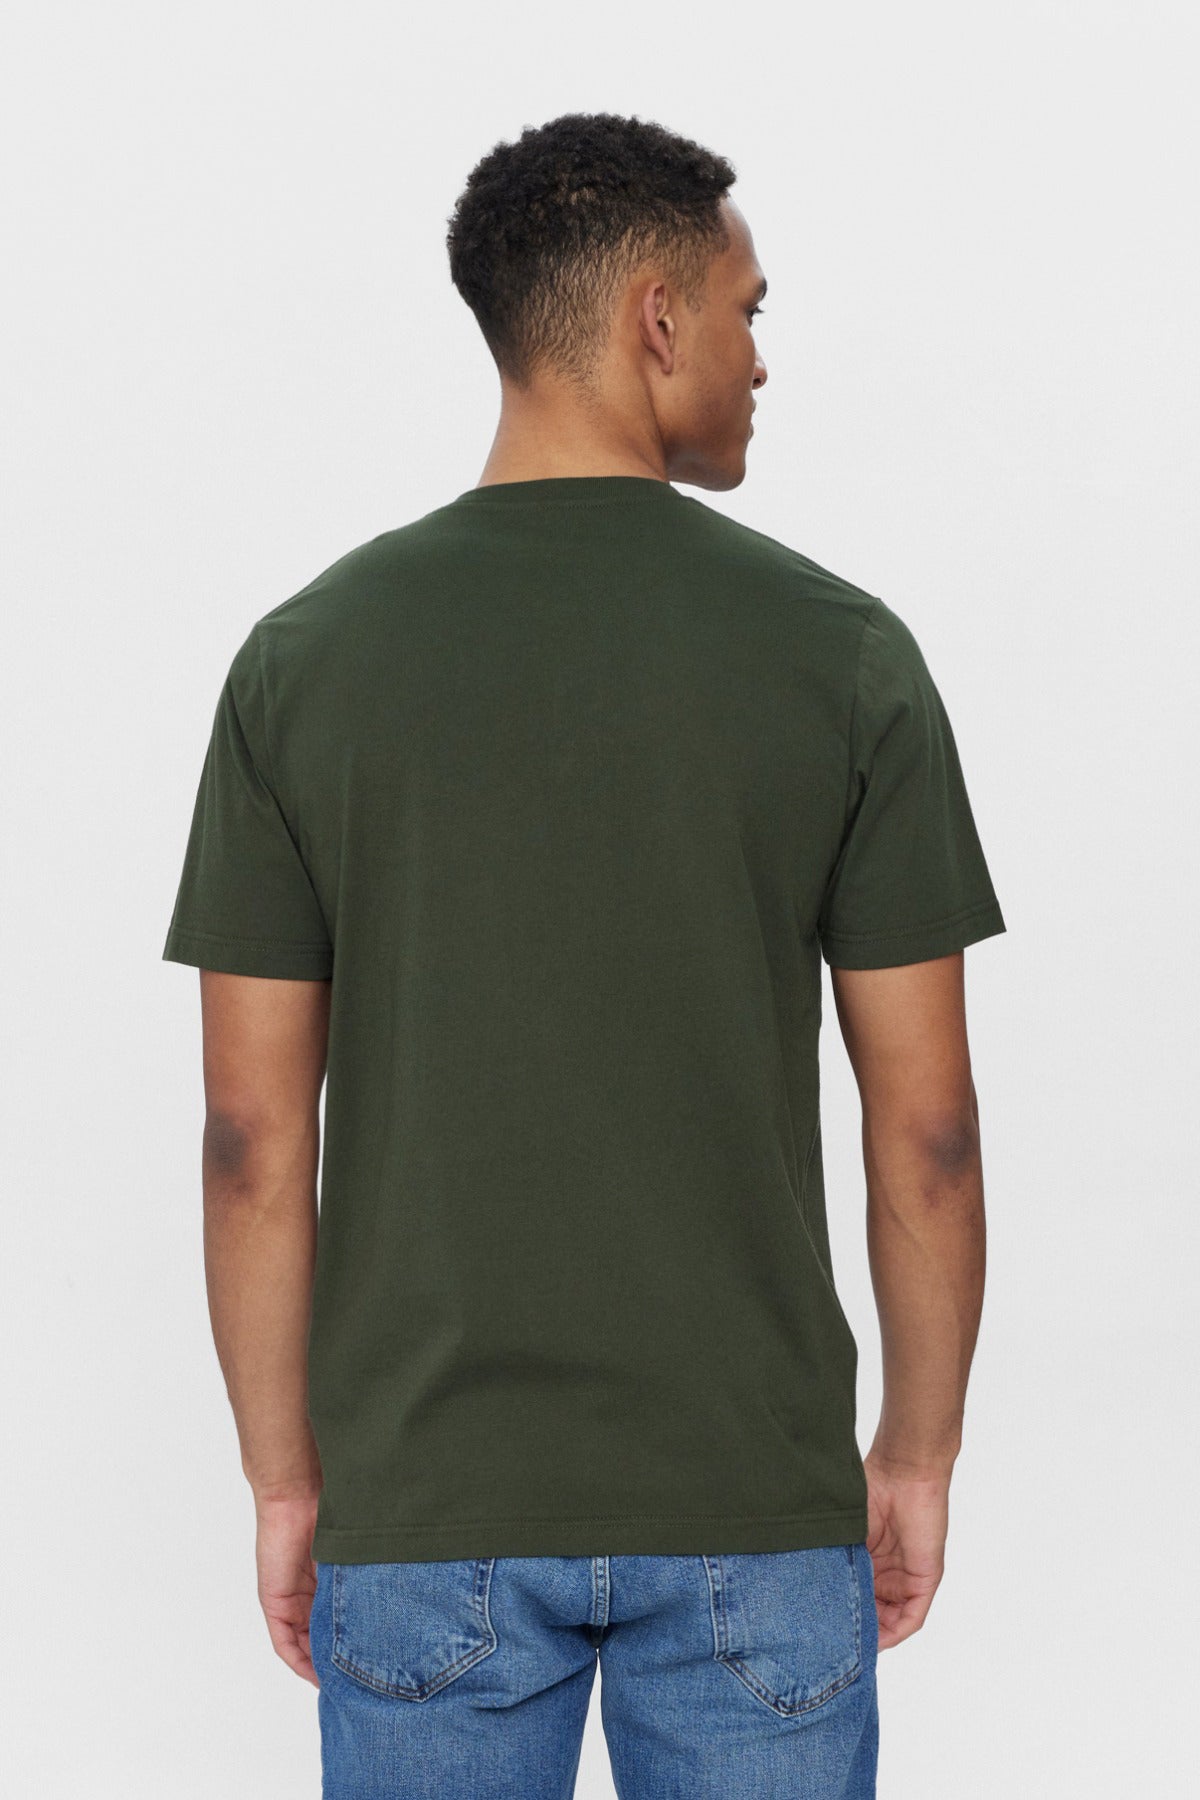 KANTT T-Shirt Obi 224132